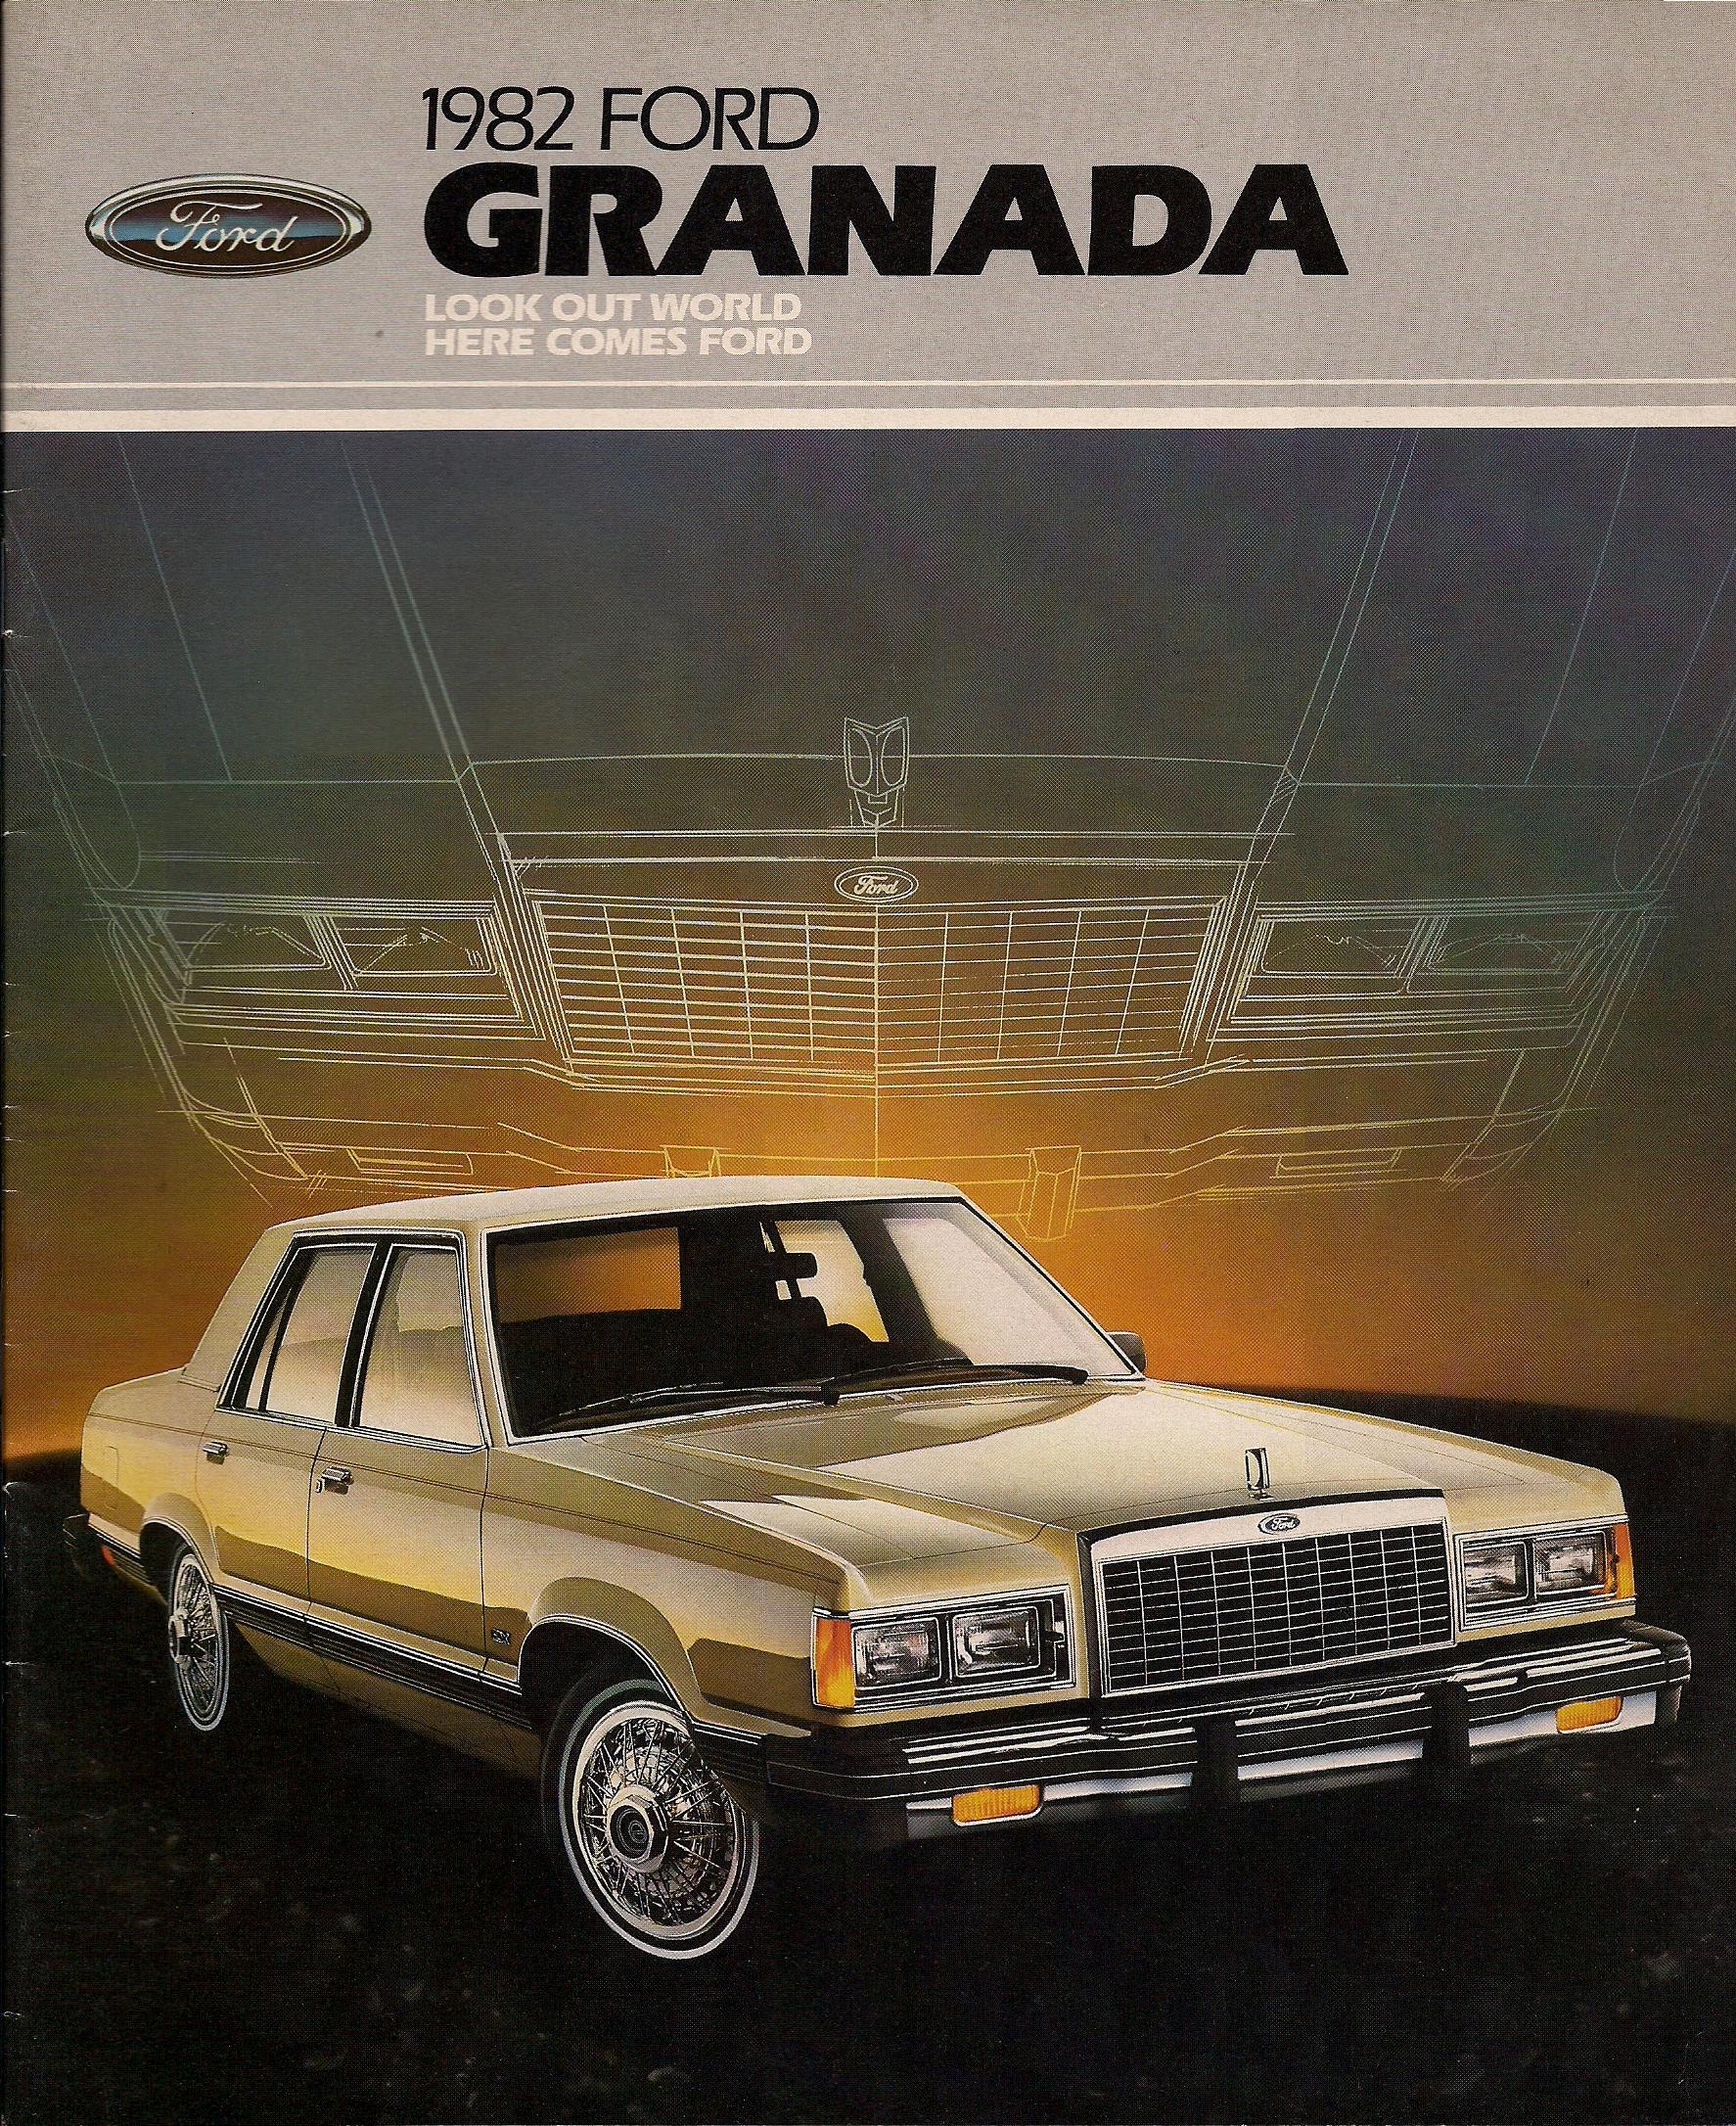 1982 Ford granada brochure #2